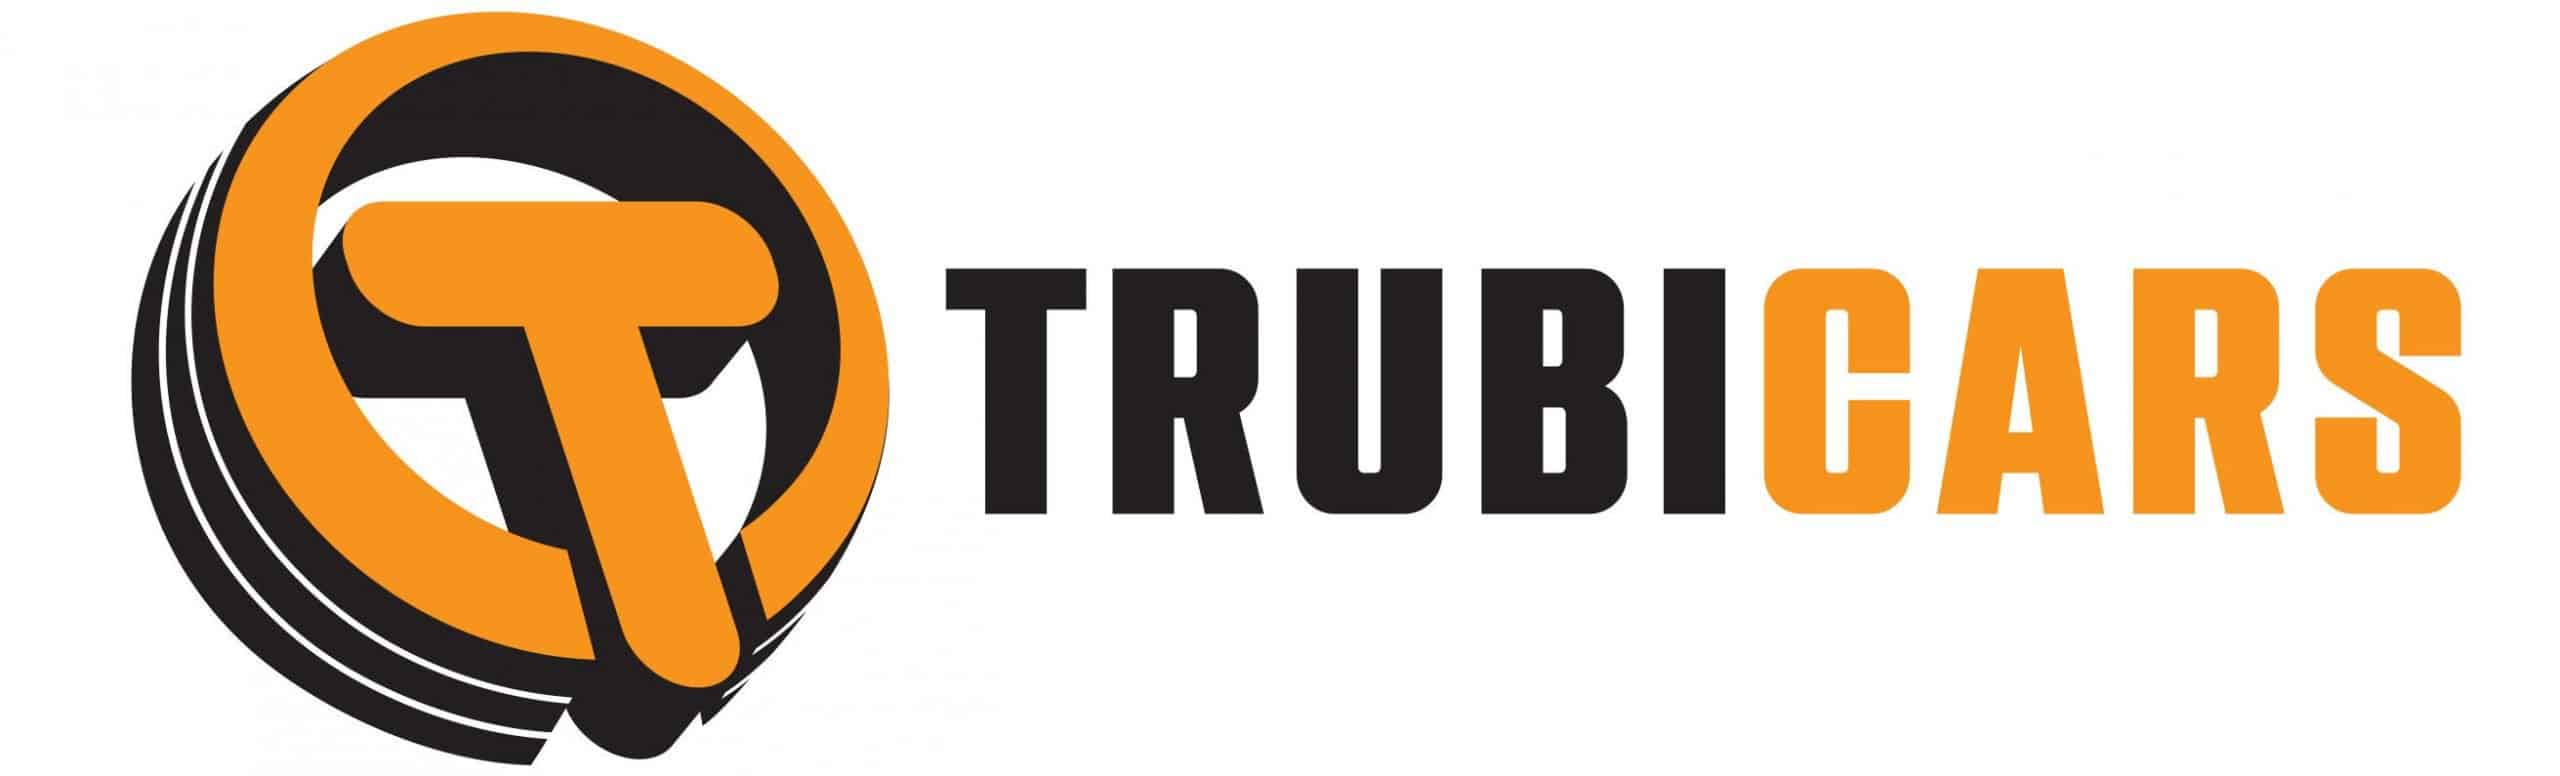 trubicars logo